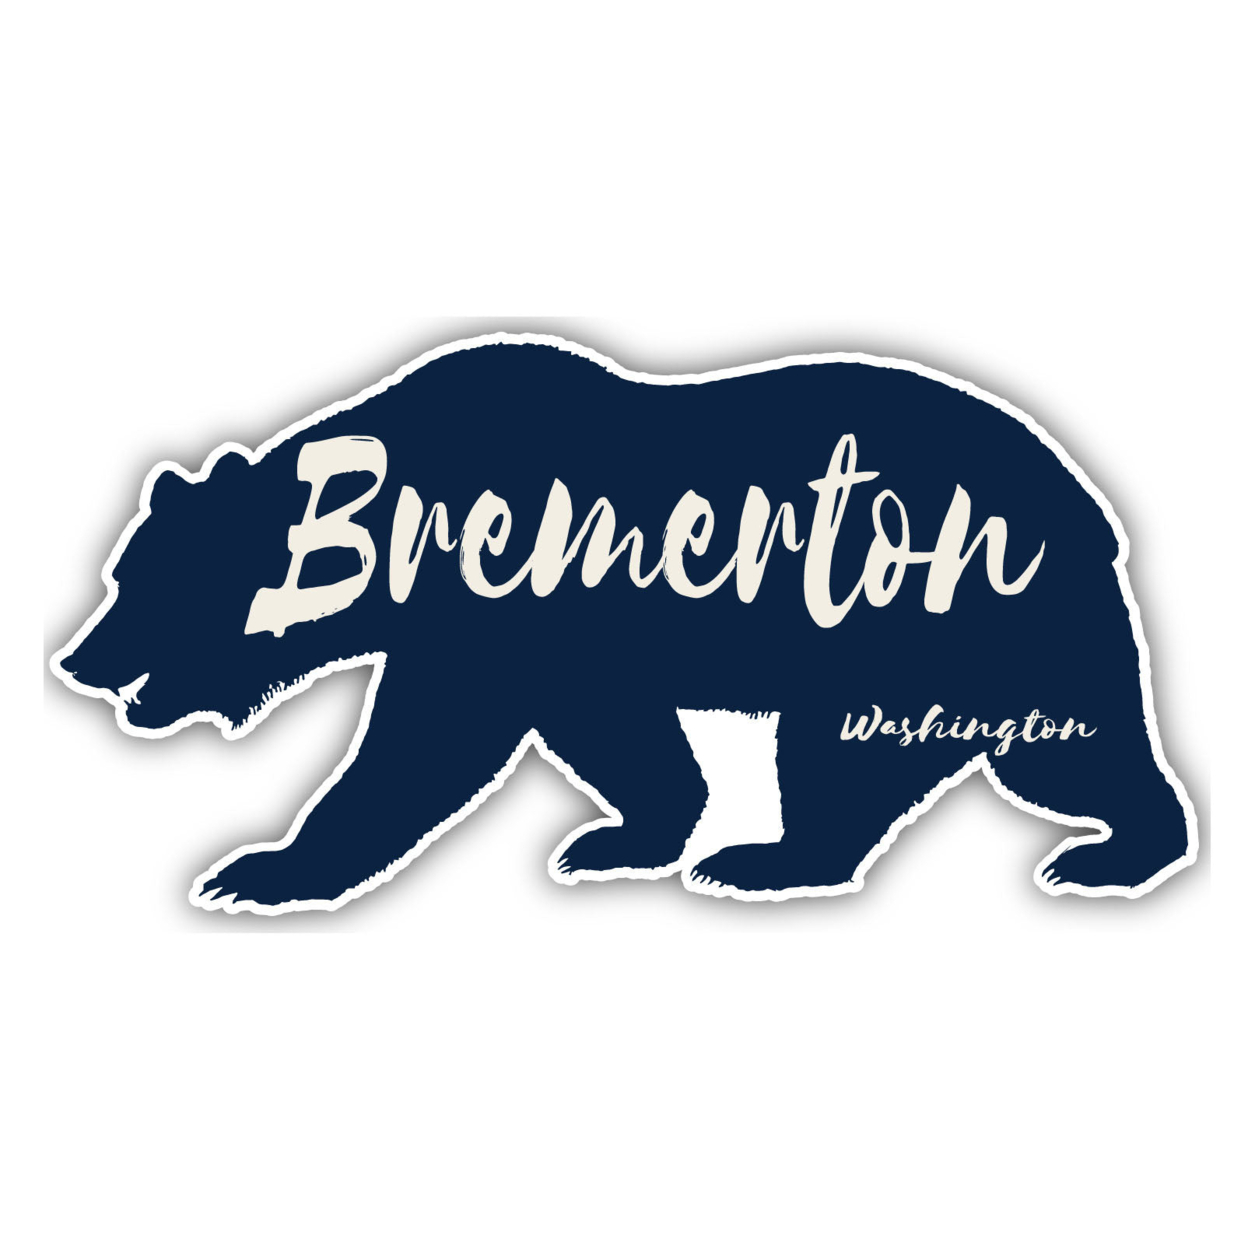 Bremerton Washington Souvenir Decorative Stickers (Choose Theme And Size) - Single Unit, 12-Inch, Tent